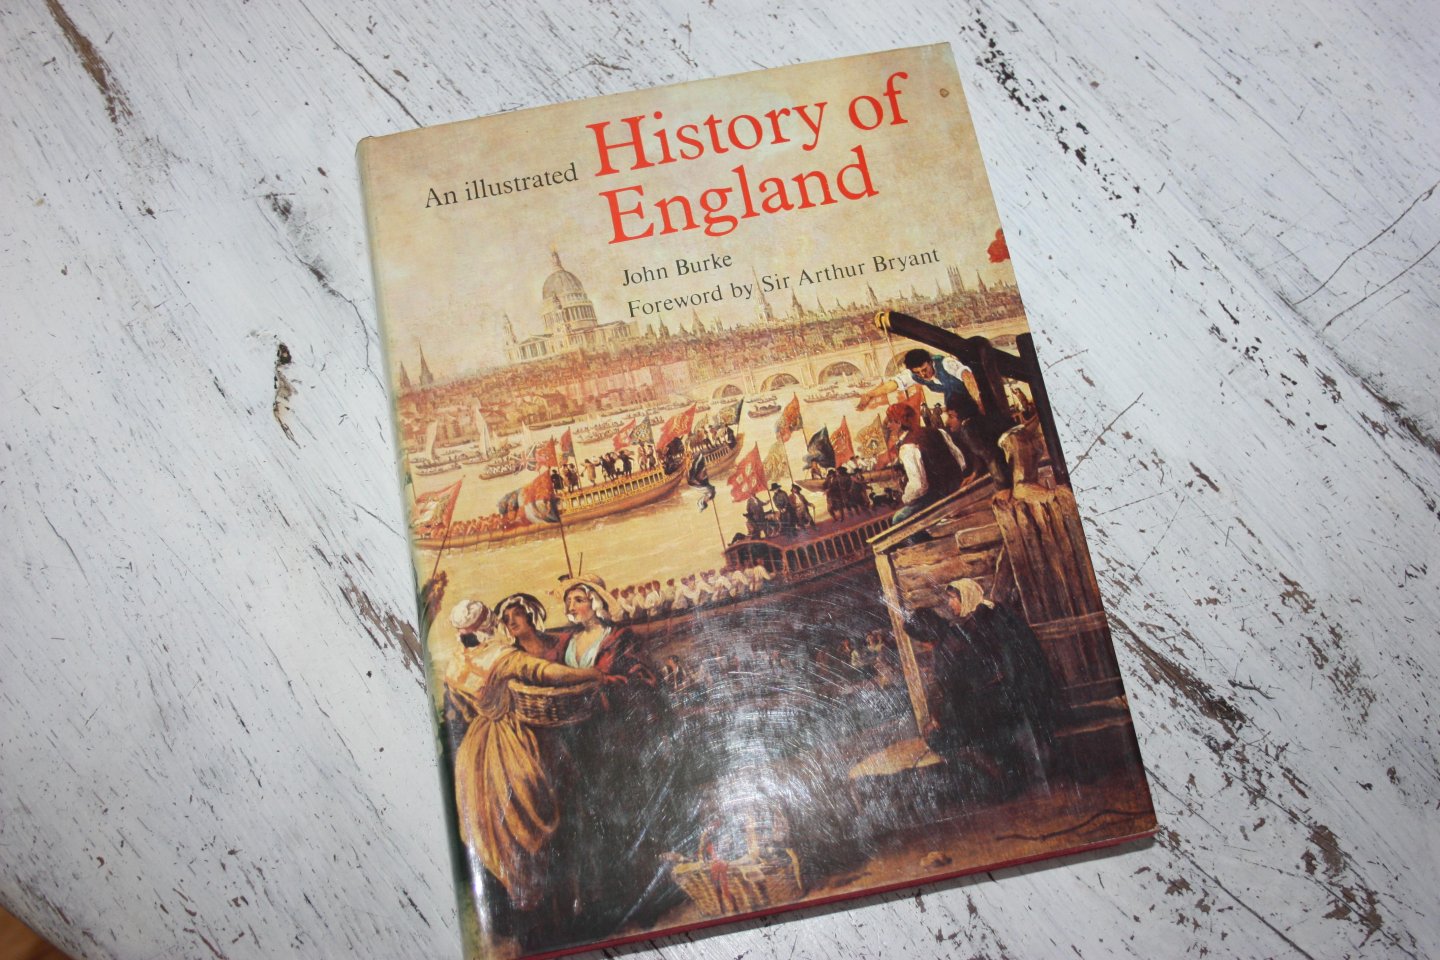 Burke, John - AN ILLUSTRATED HISTORY OF ENGLAND